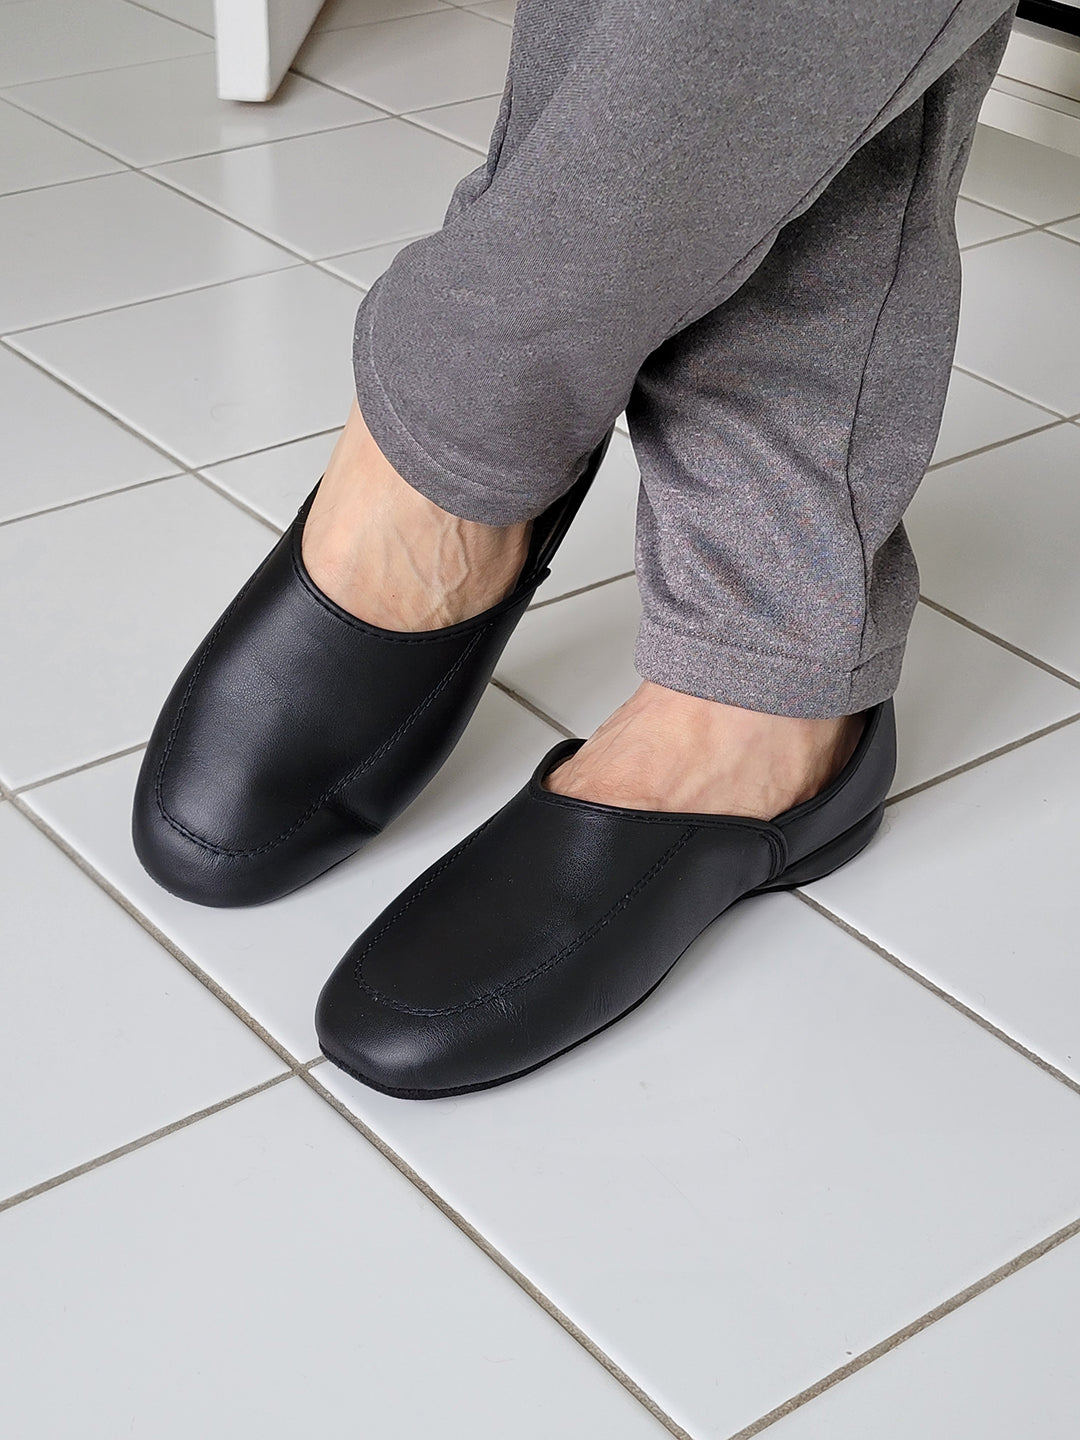 ZEROSTRESS CHARLES Men's Slippers Genuine Leather